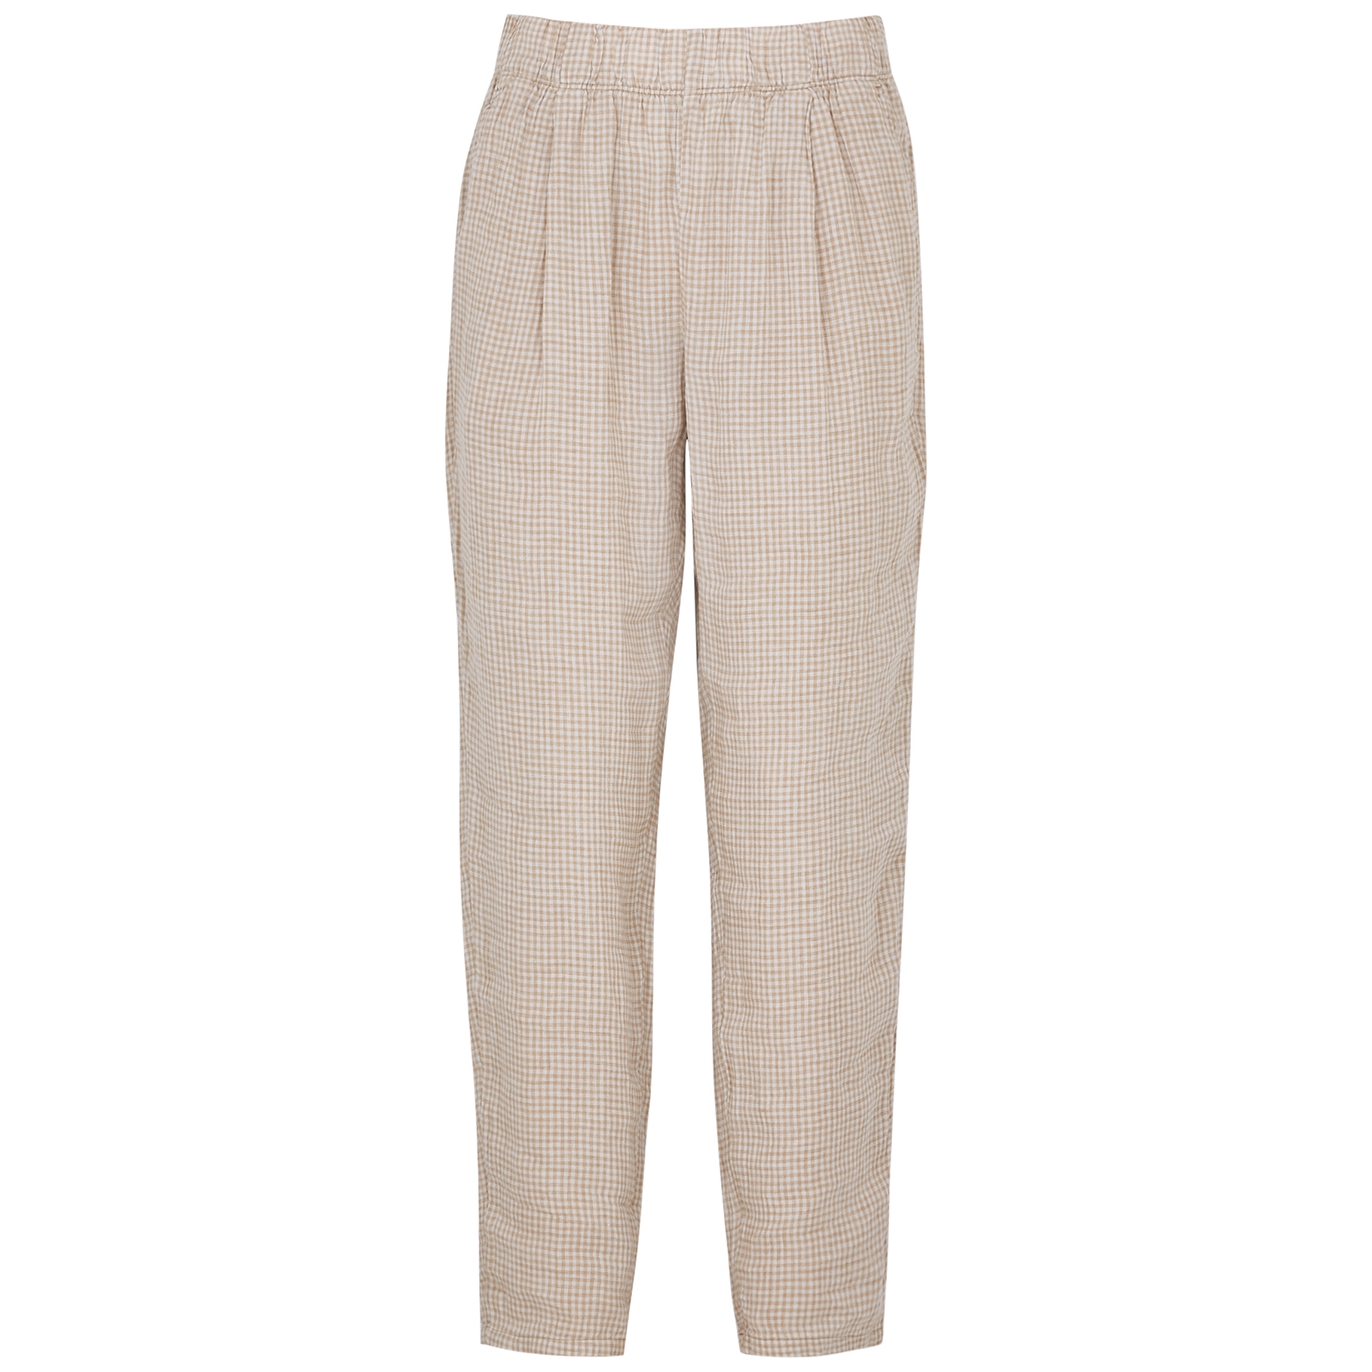 Eileen Fisher Sand Gingham Linen Trousers - Beige - S